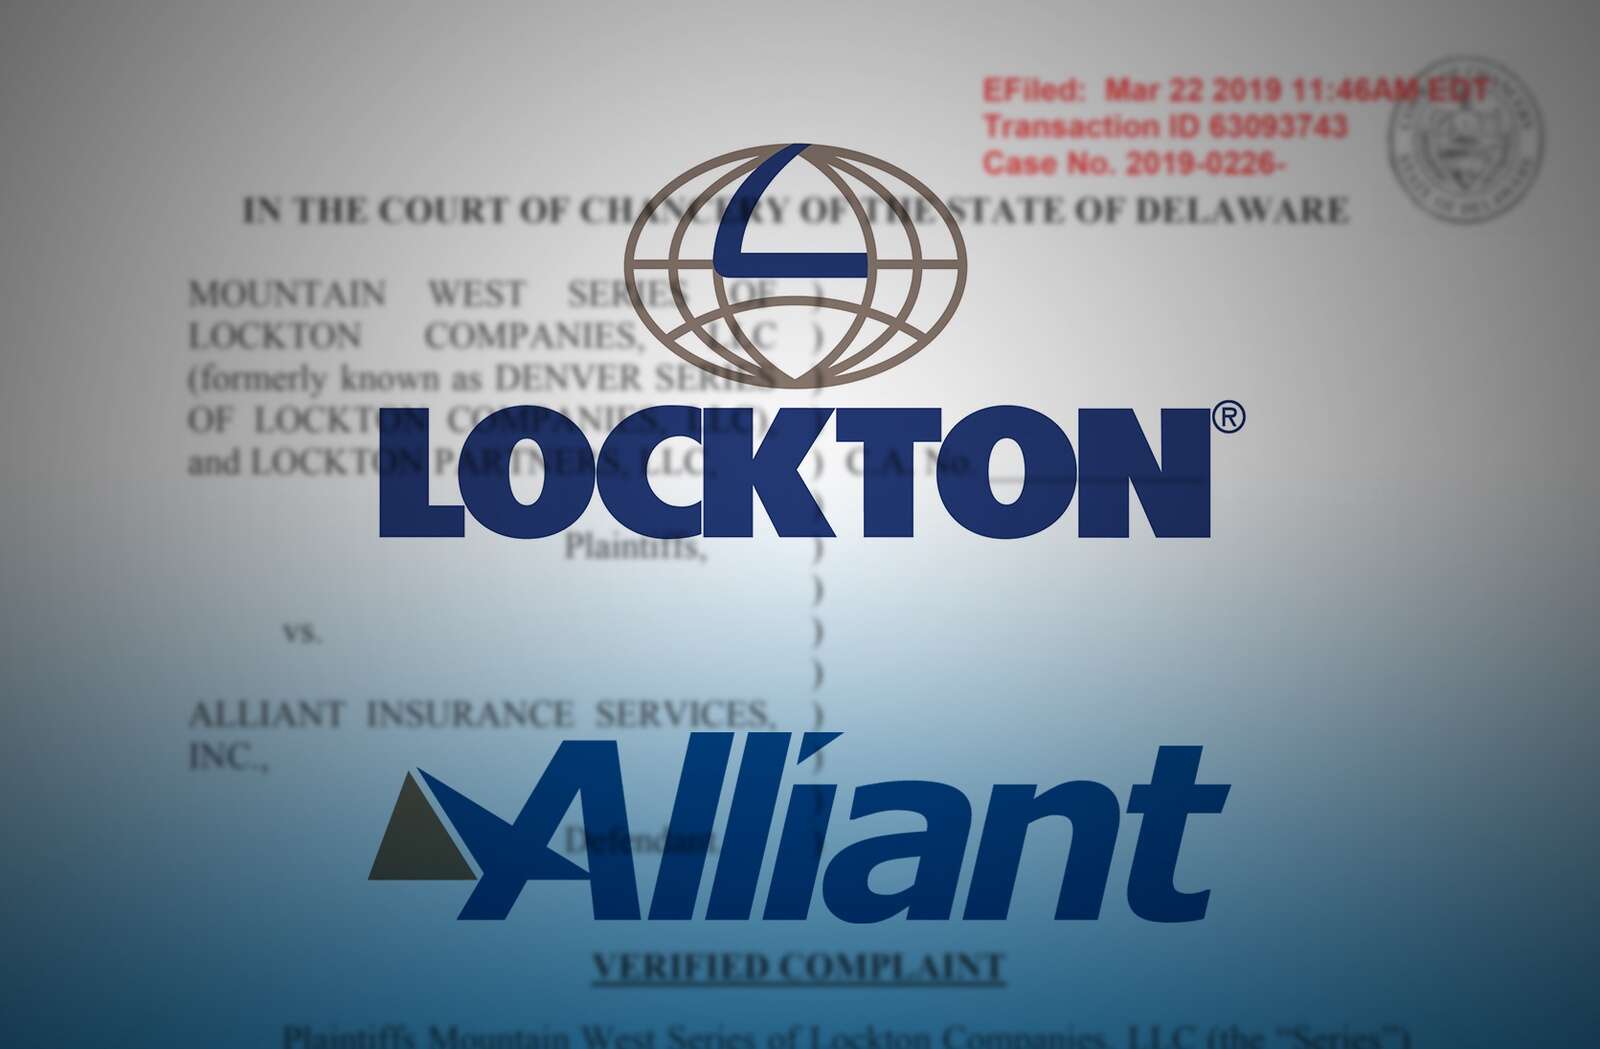 Lockton wins TRO against Alliant in Delaware court